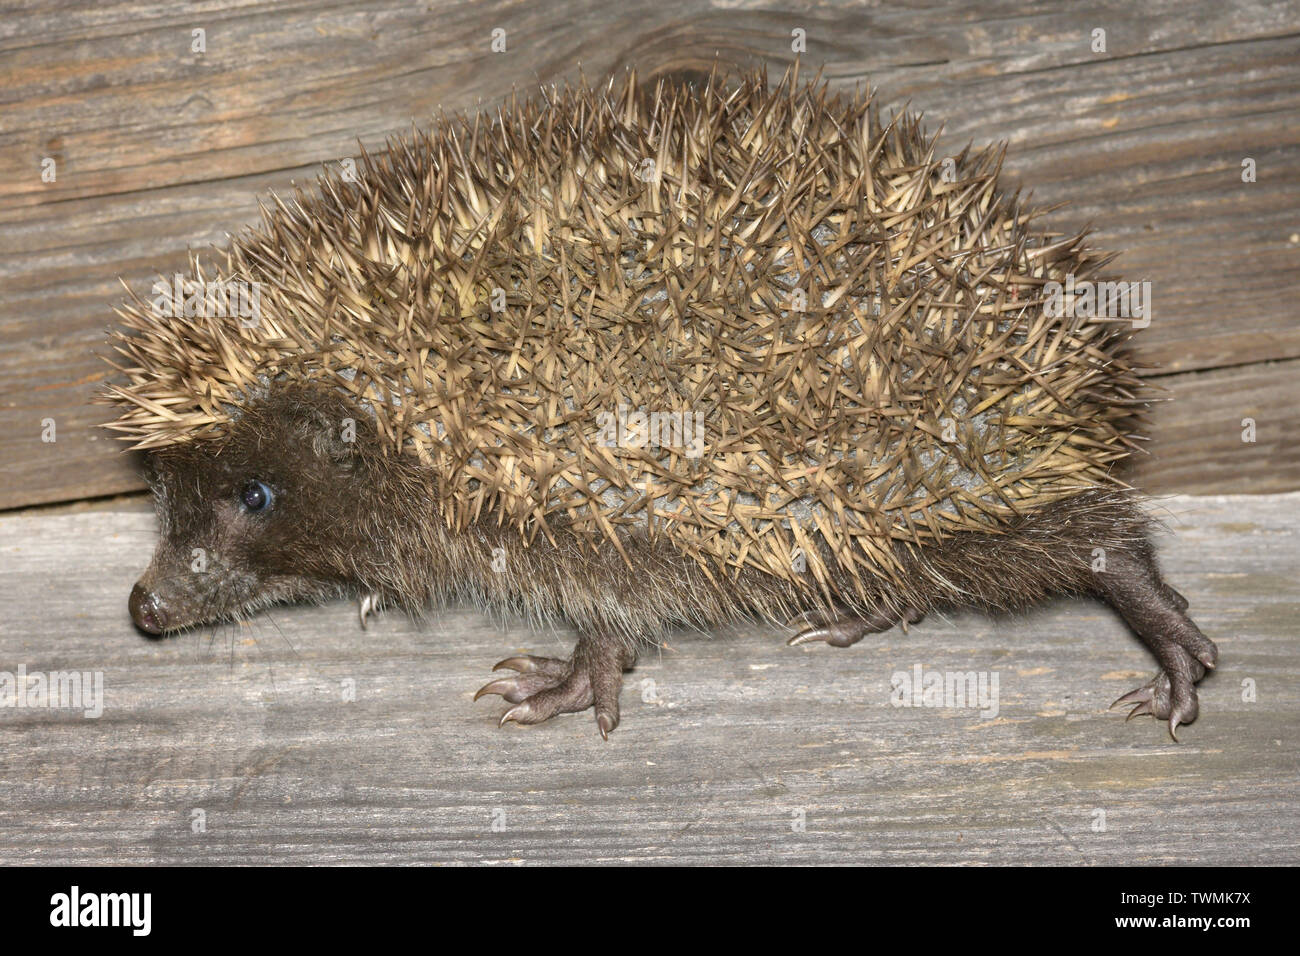 Erinaceus roumanicus, Northern white-breasted hedgehog, Nördlicher Weißbrustigel, walking Stock Photo